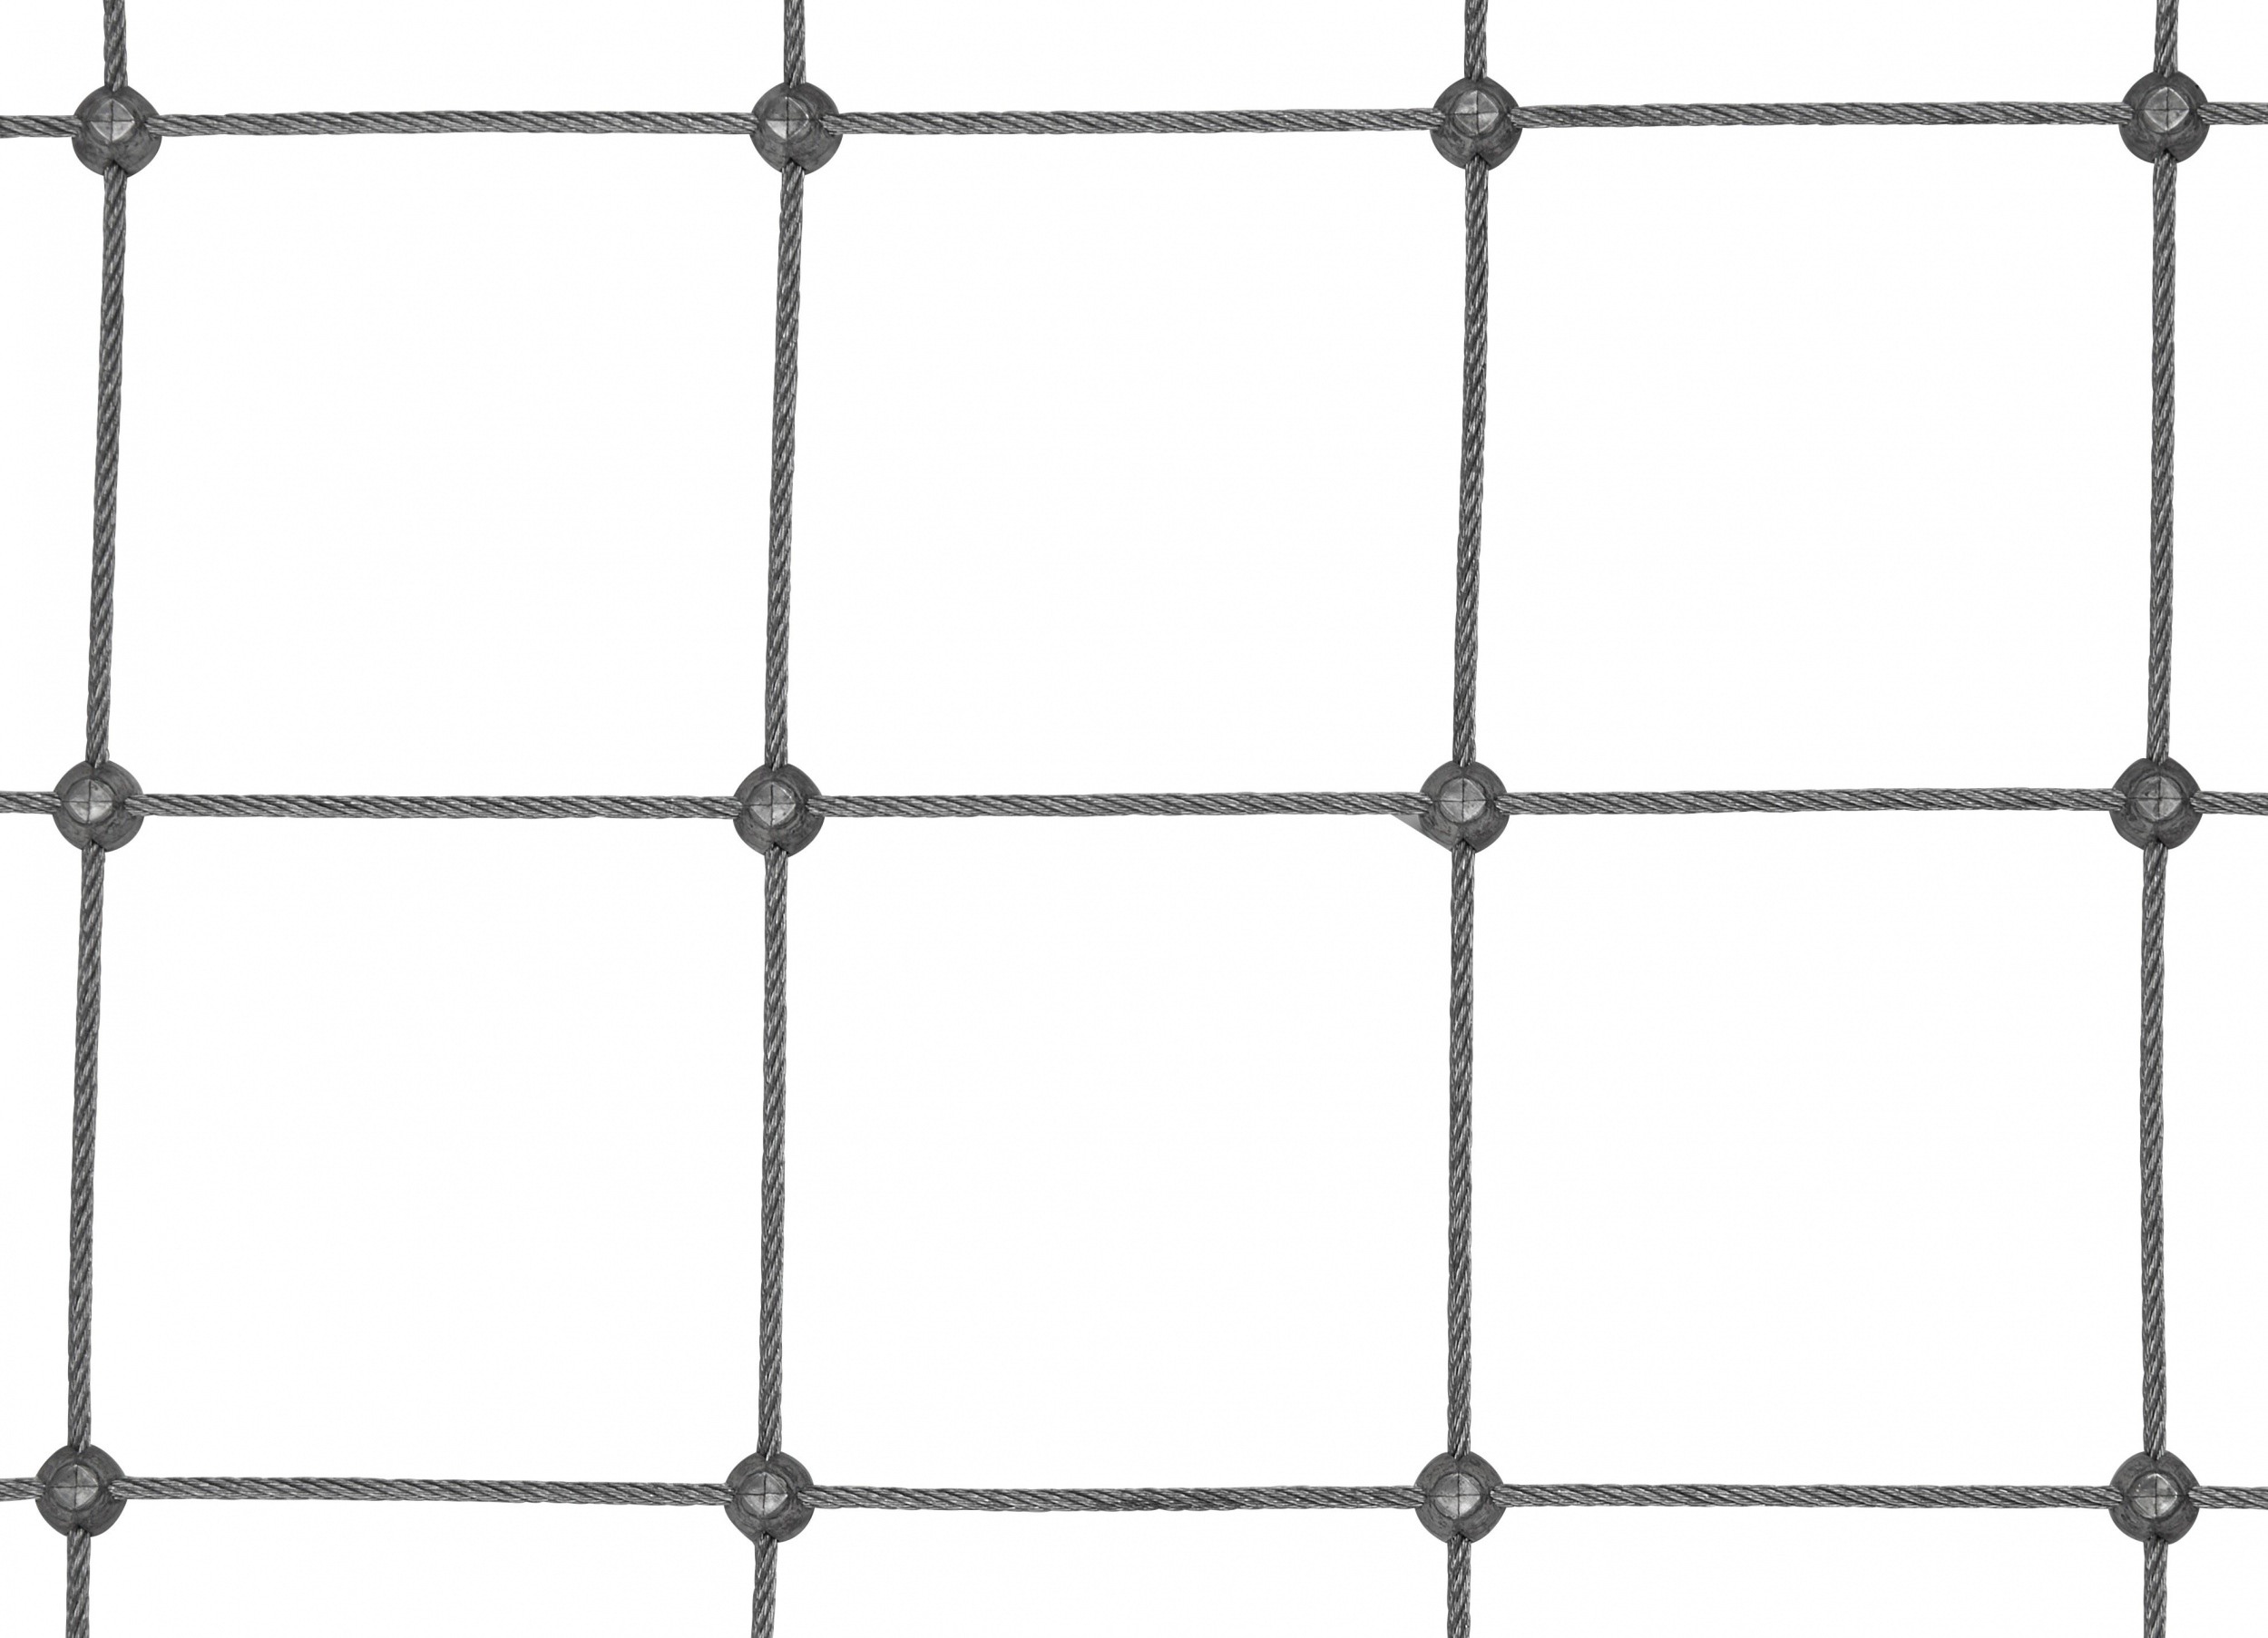 Netz aus Edelstahl per m² mit 5,0 mm Materialstärke